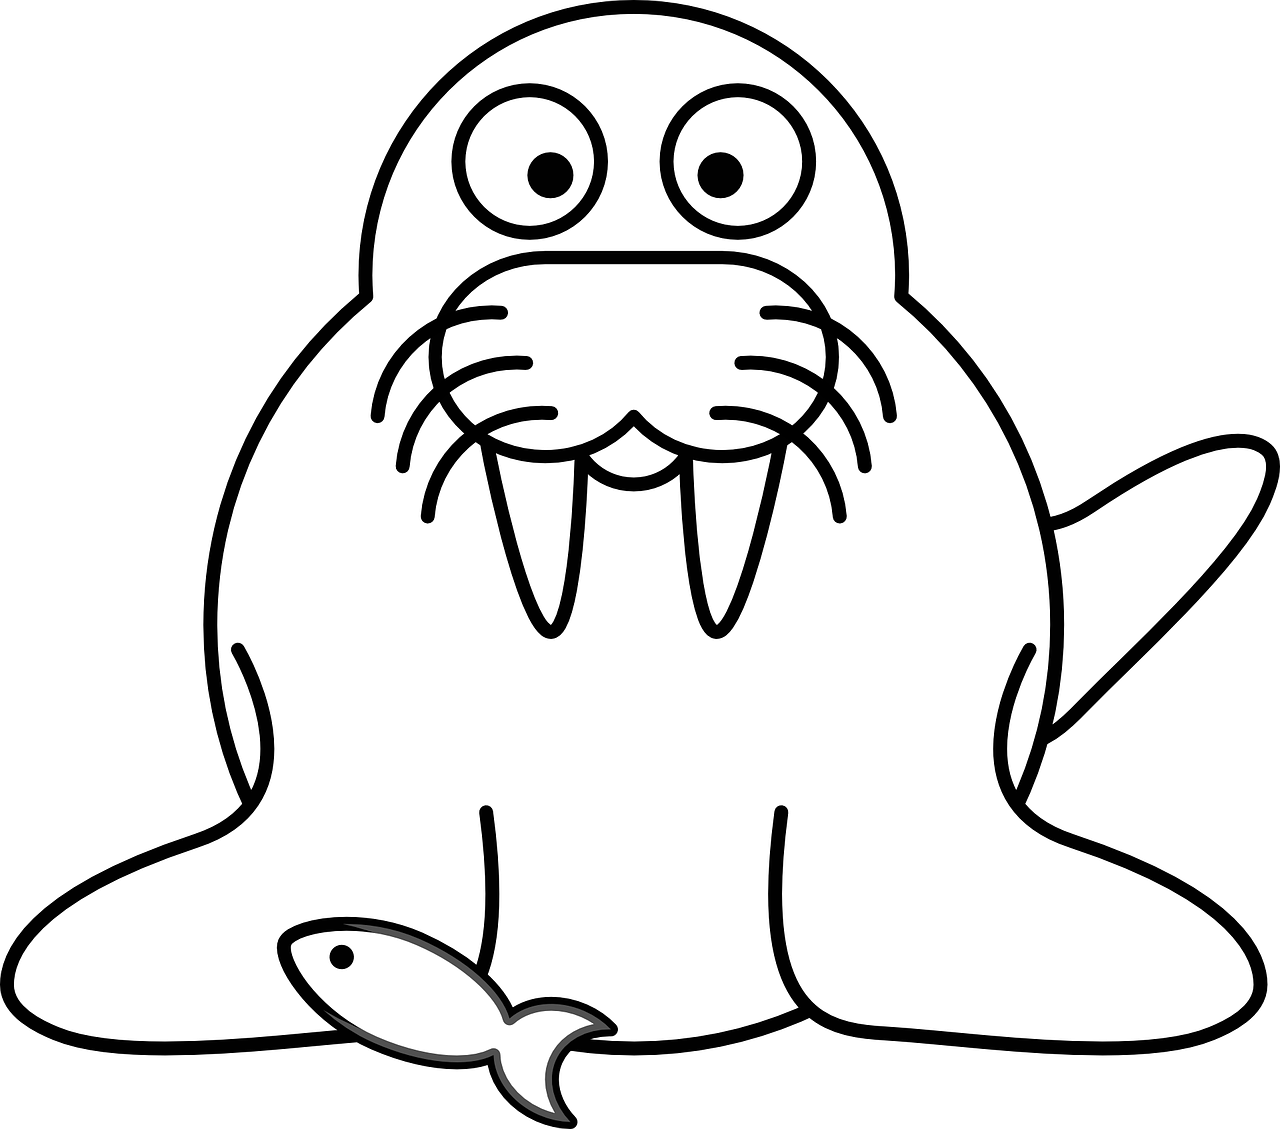 Cartoon Walrus With Fish_ Vector Illustration